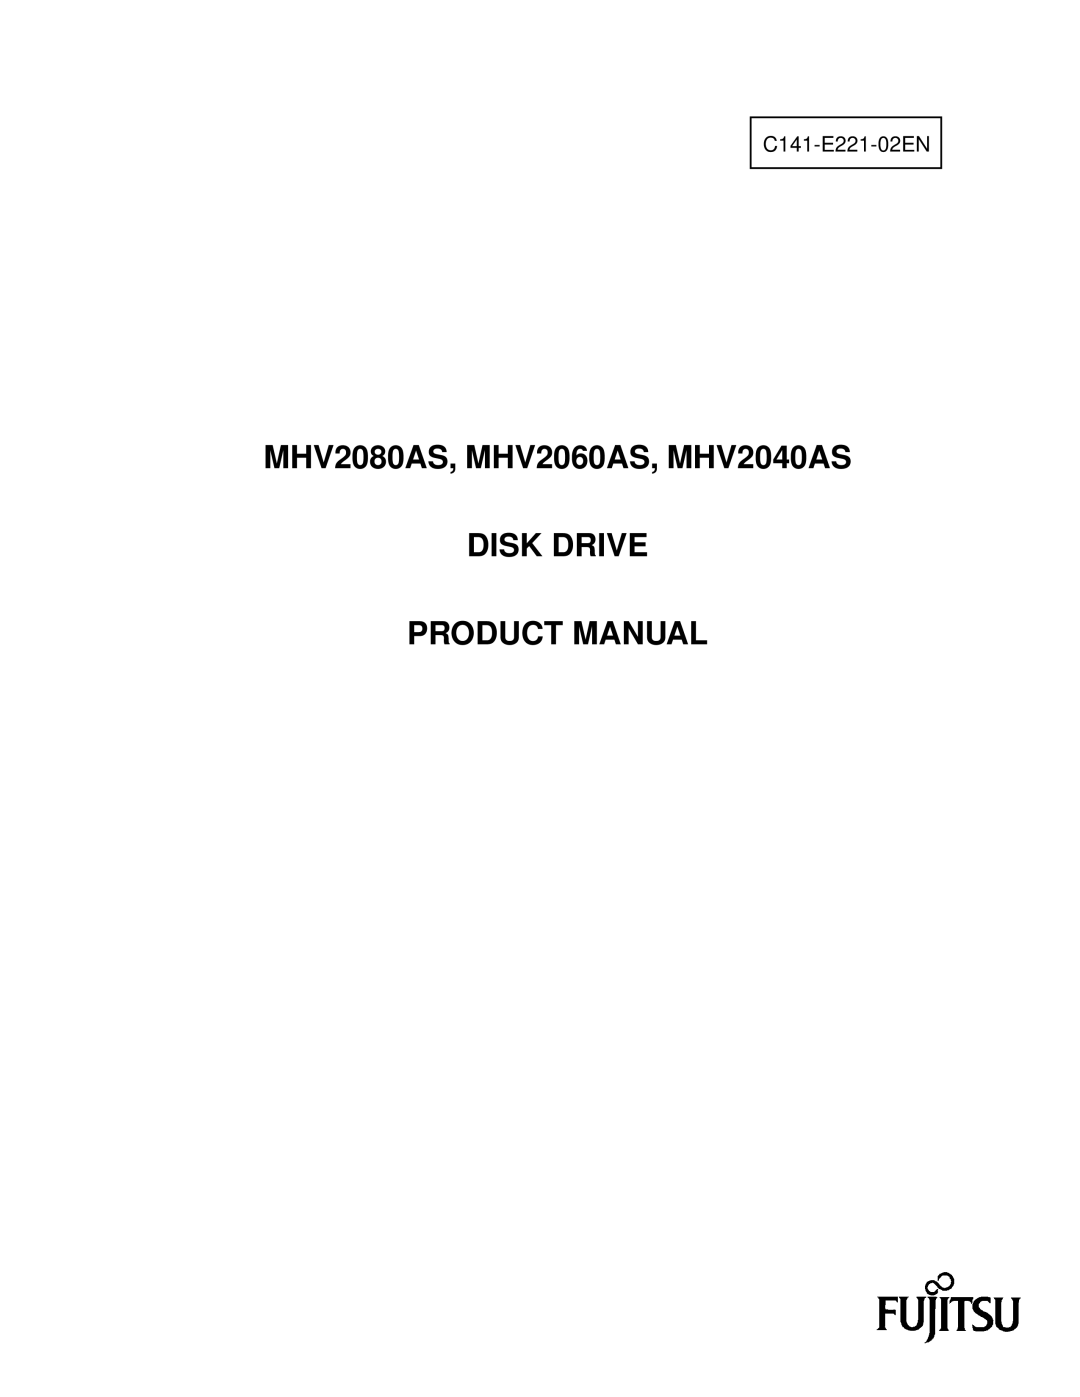 Fujitsu manual MHV2080AS, MHV2060AS, MHV2040AS, Disk Drive Product Manual 